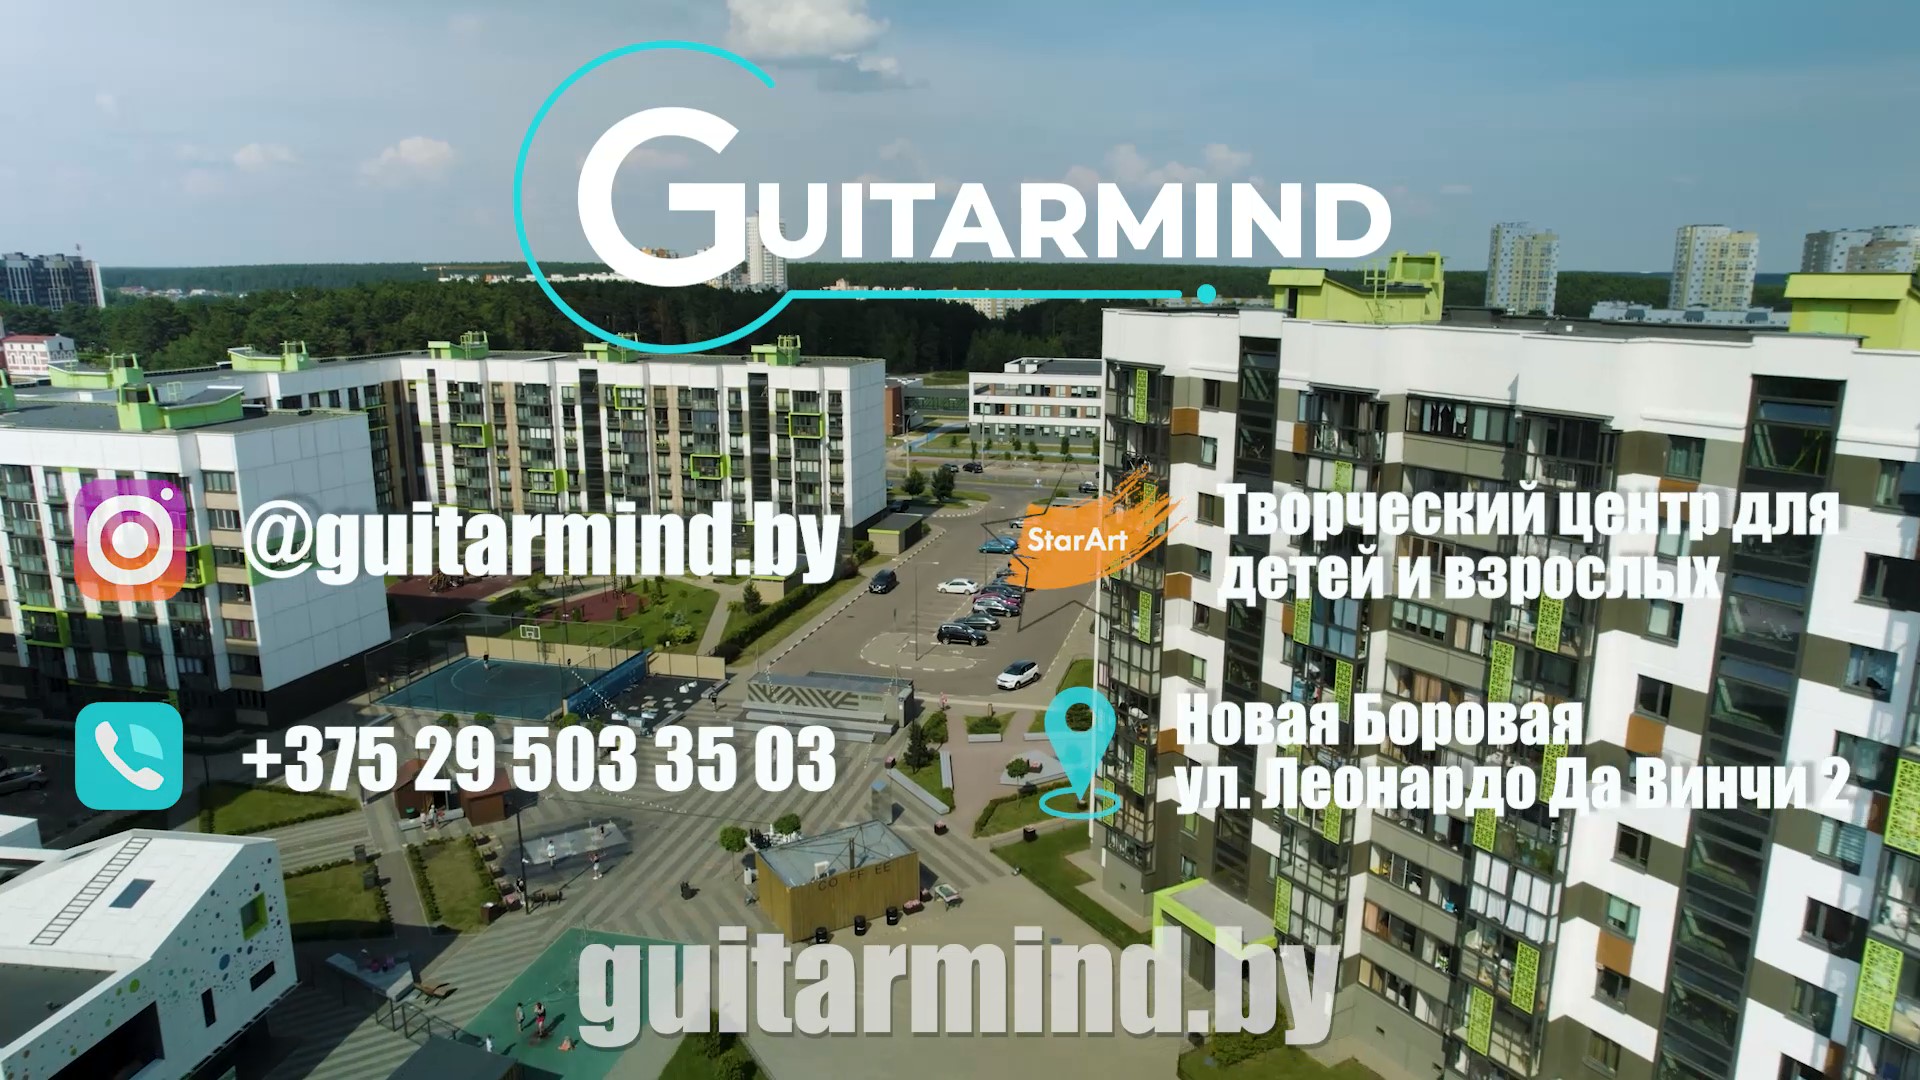 Музыкальная школа "Guitarmind"